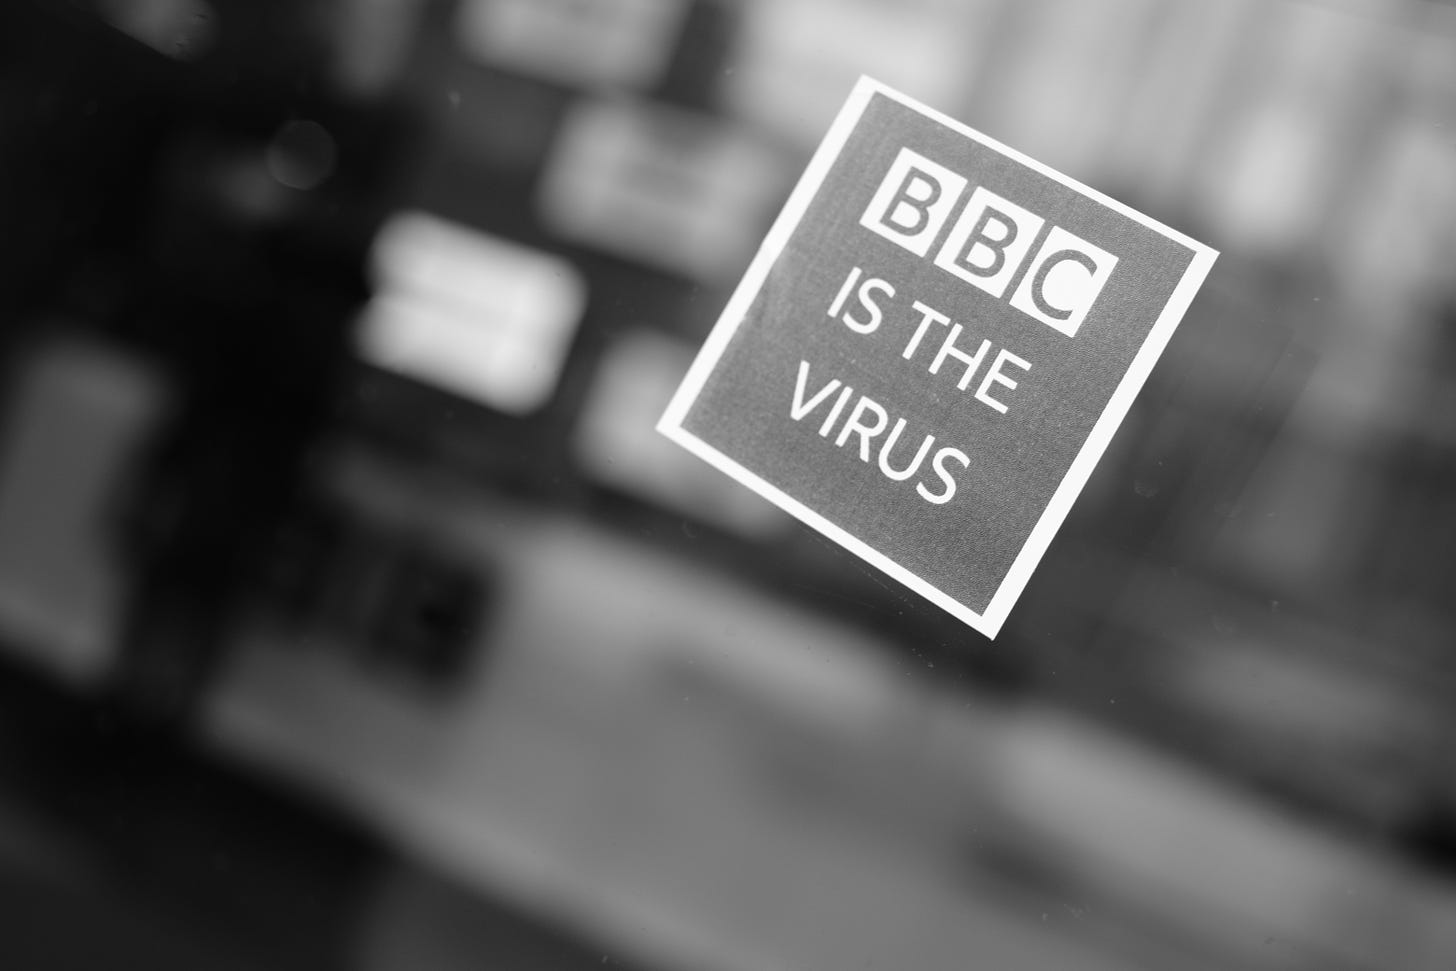 BBC is the virus